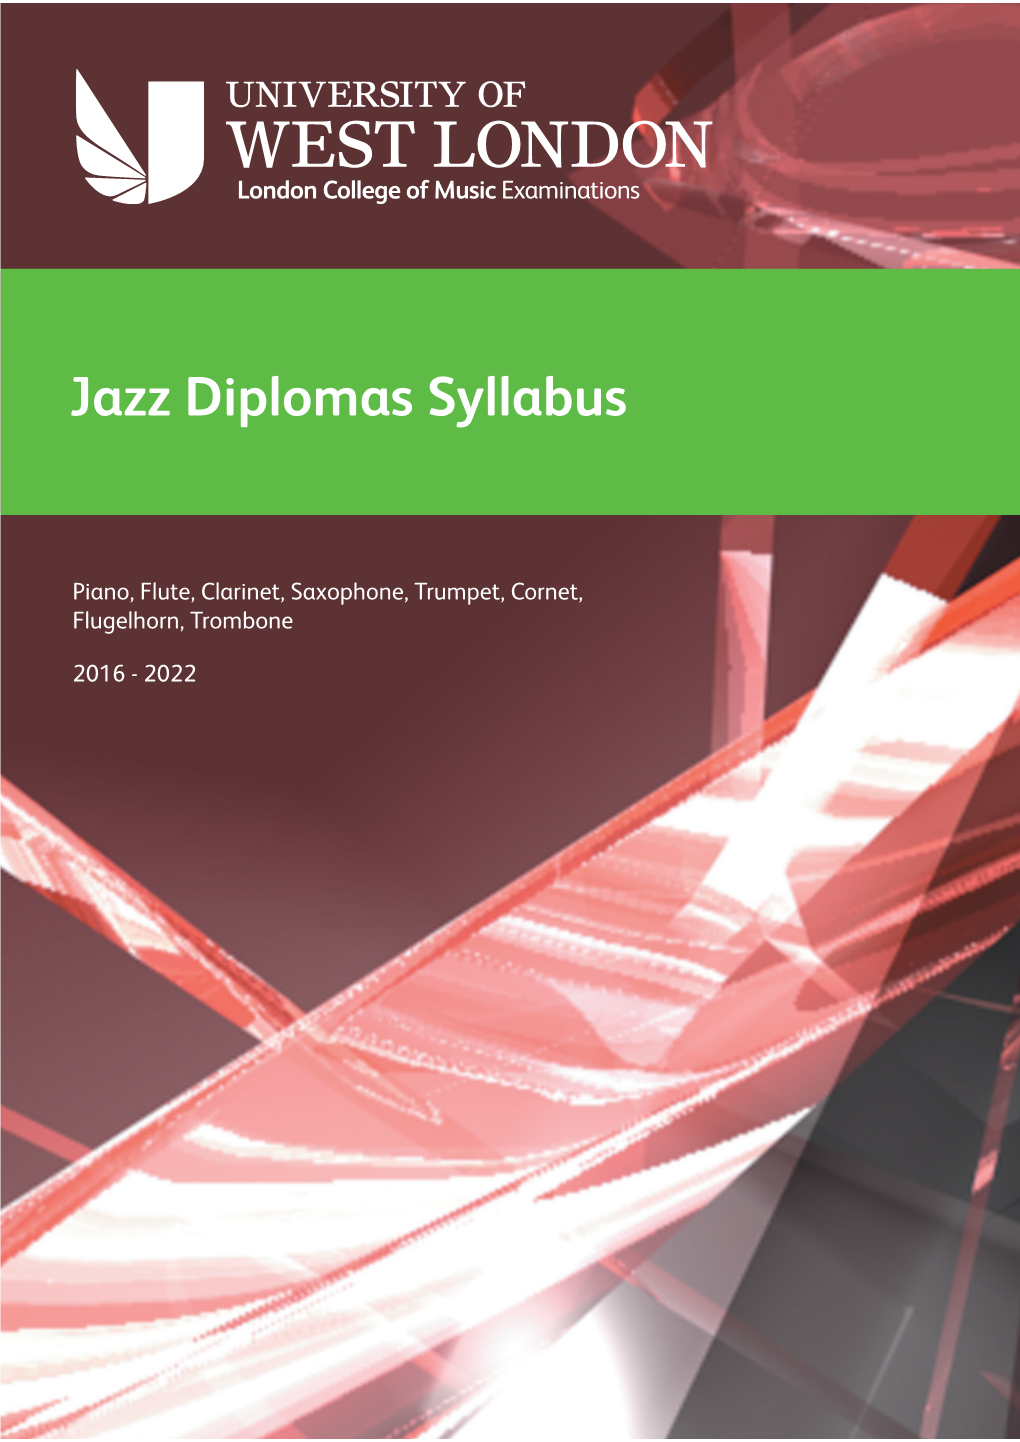 Jazz Piano Diploma Syllabus